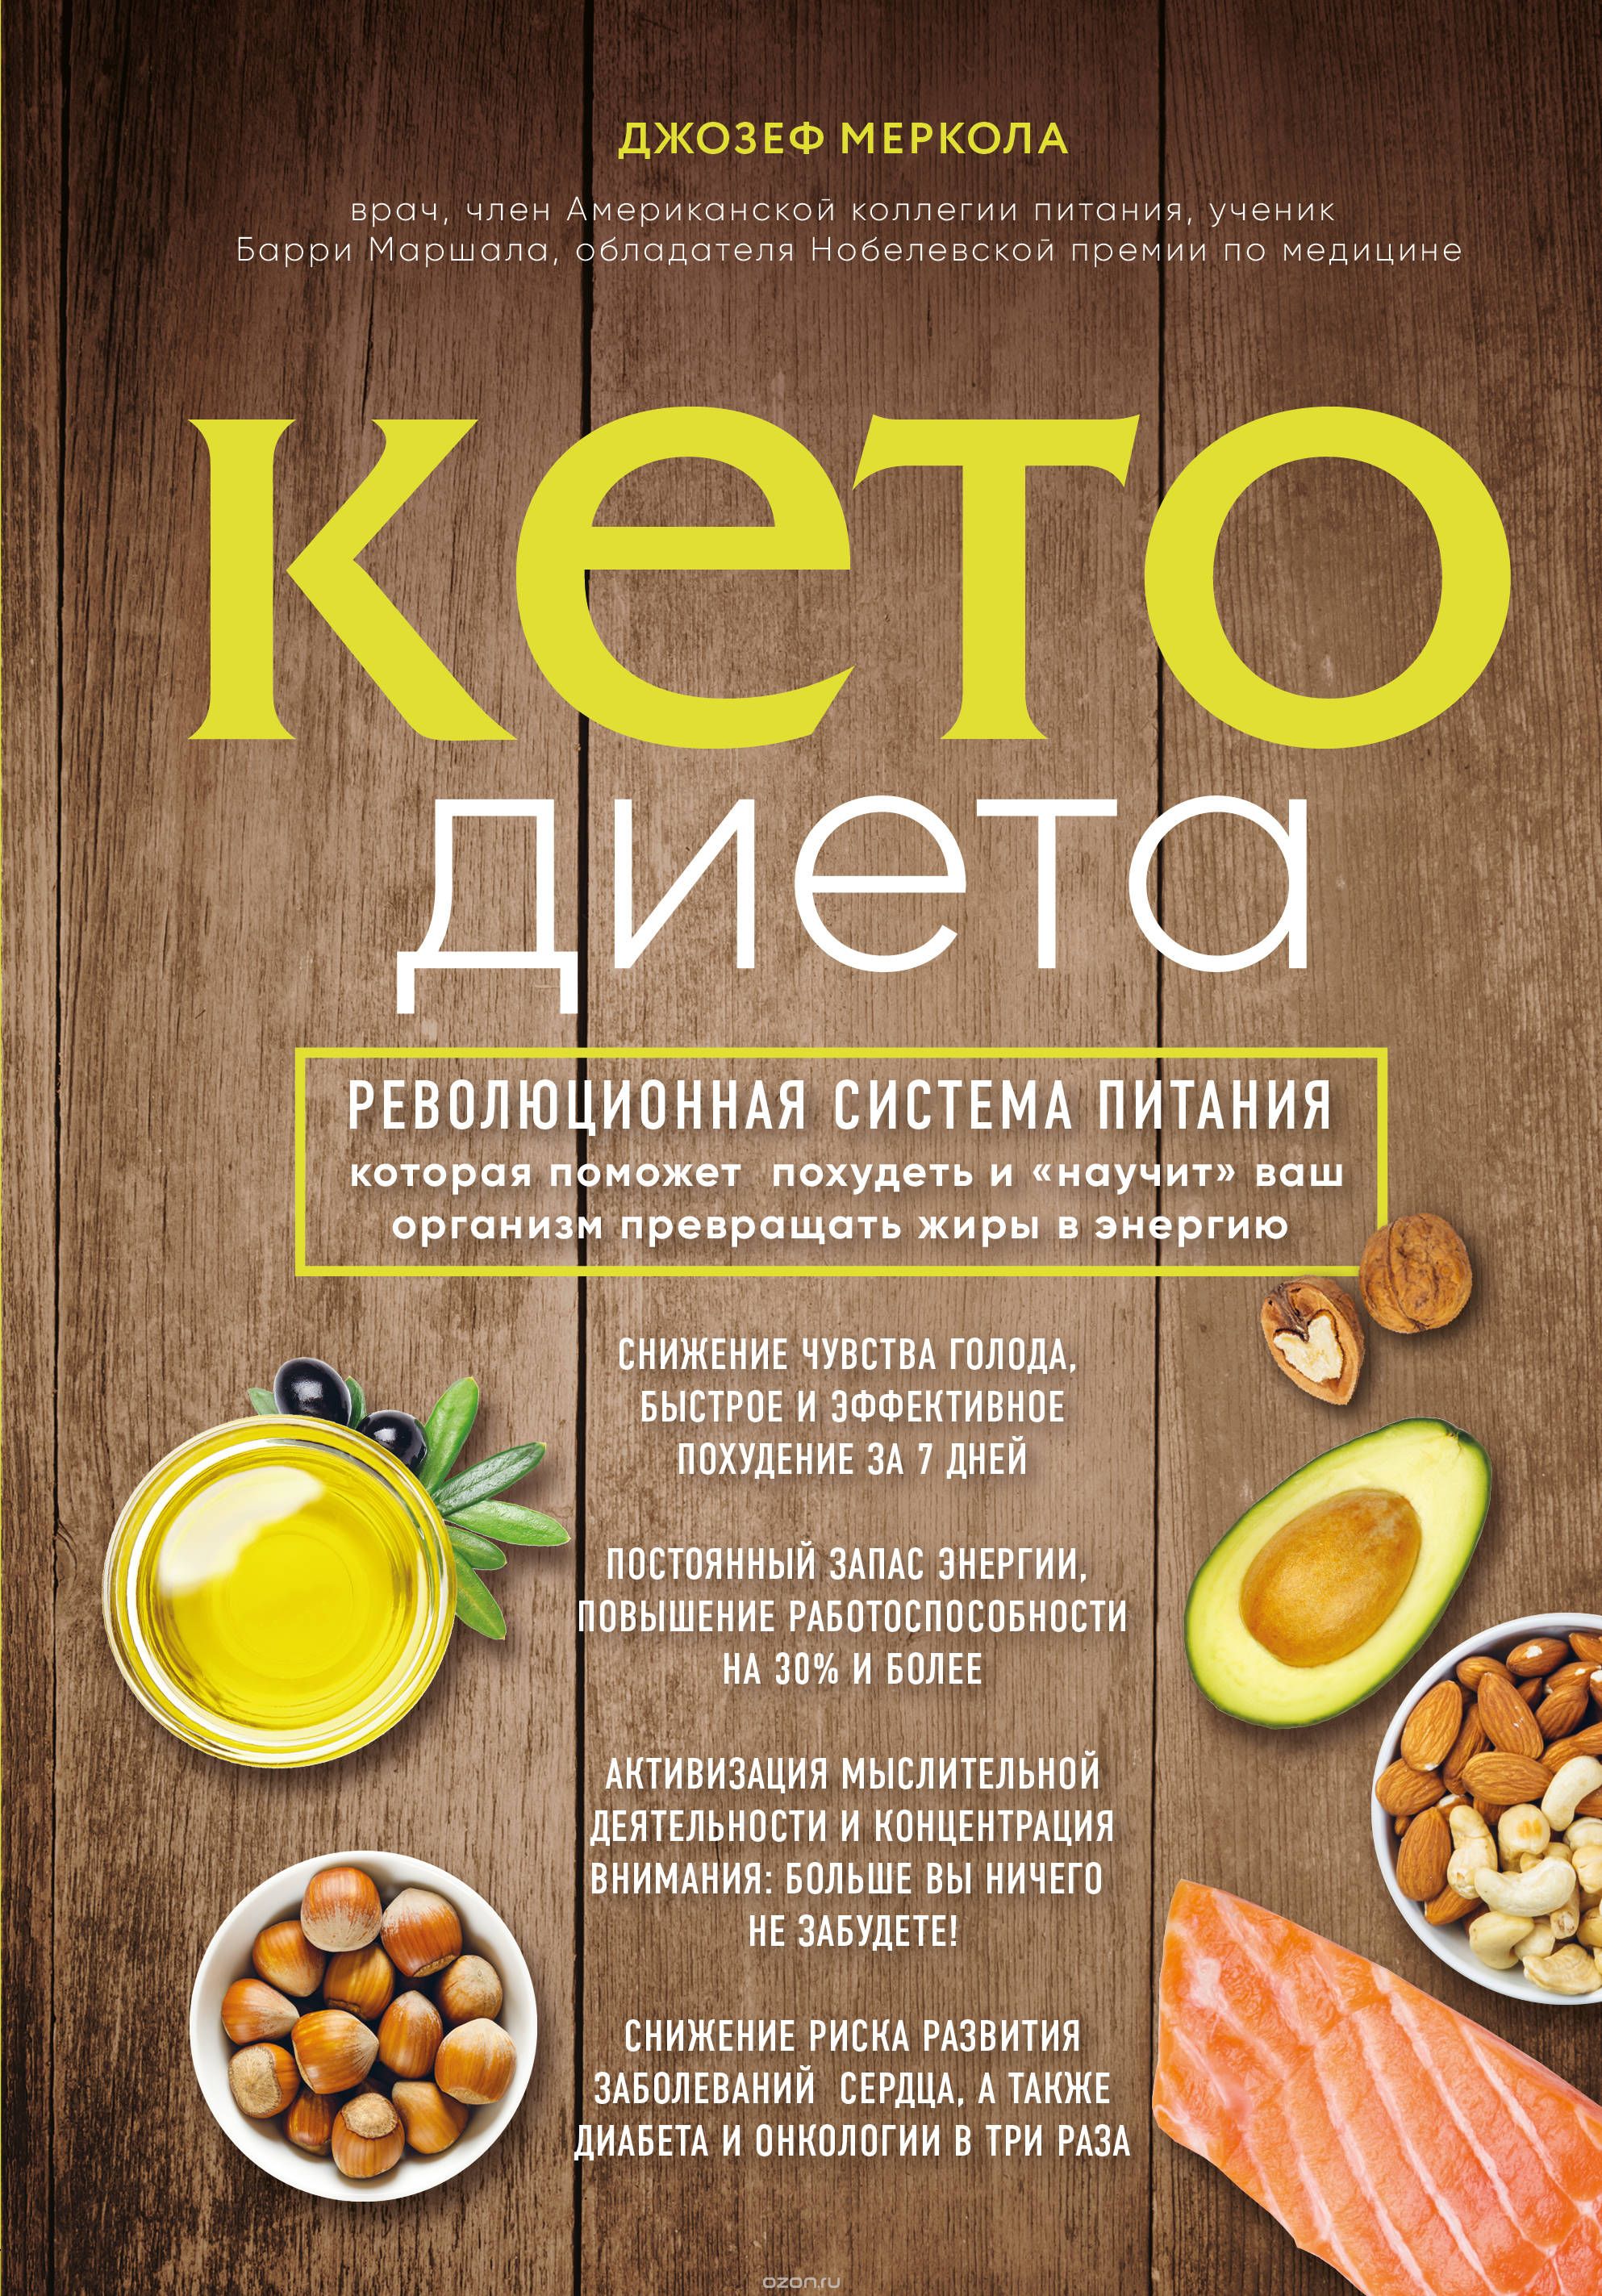 Dieta Keto (Ketogenica) – Meniu Zilnic Pentru Incepatori, Forum Pareri Retete (2021)